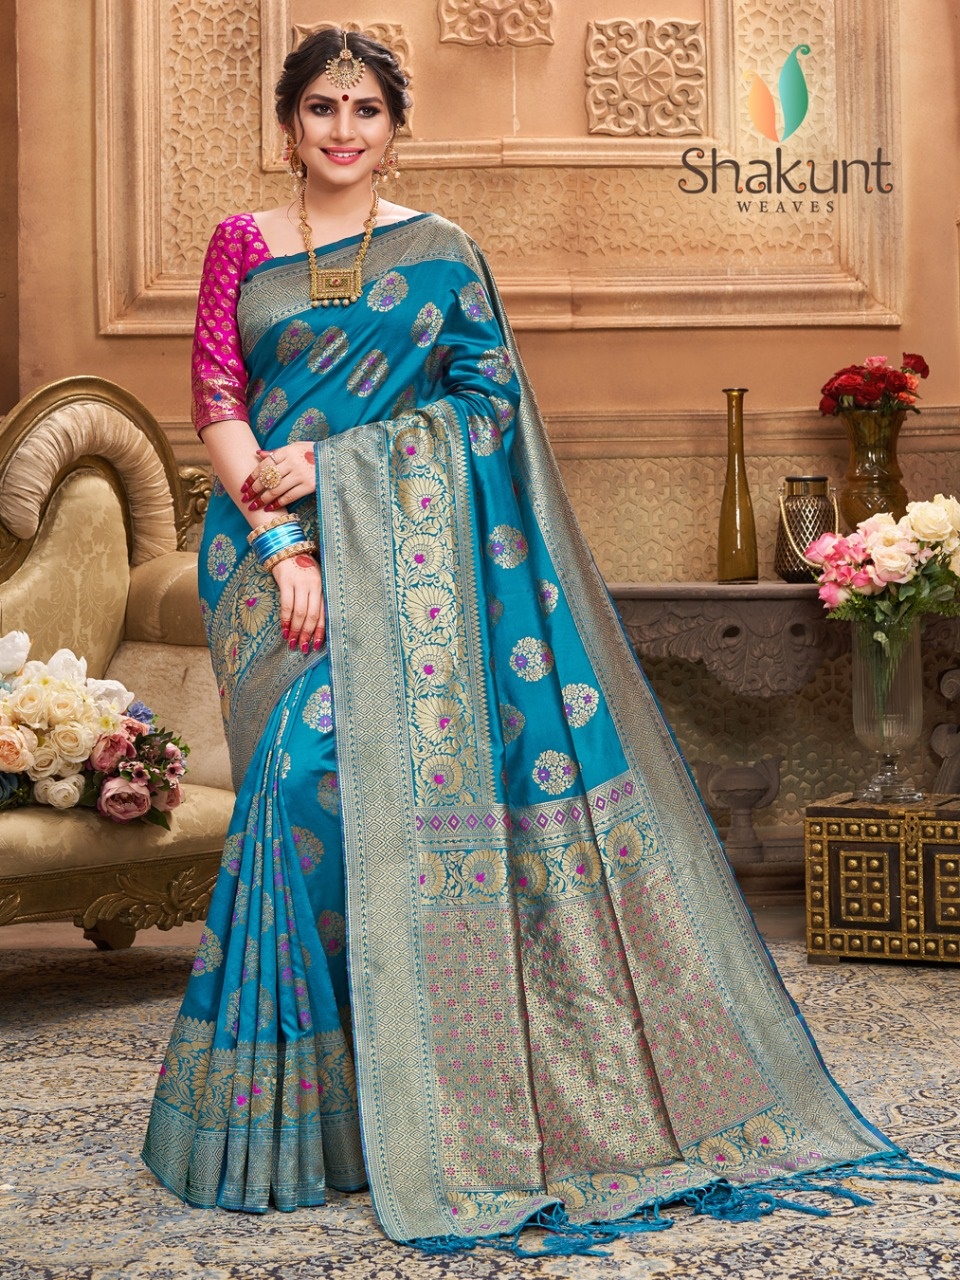 Shakunt Weaves Kishori Silk Designer Silk Sarees Collection ...